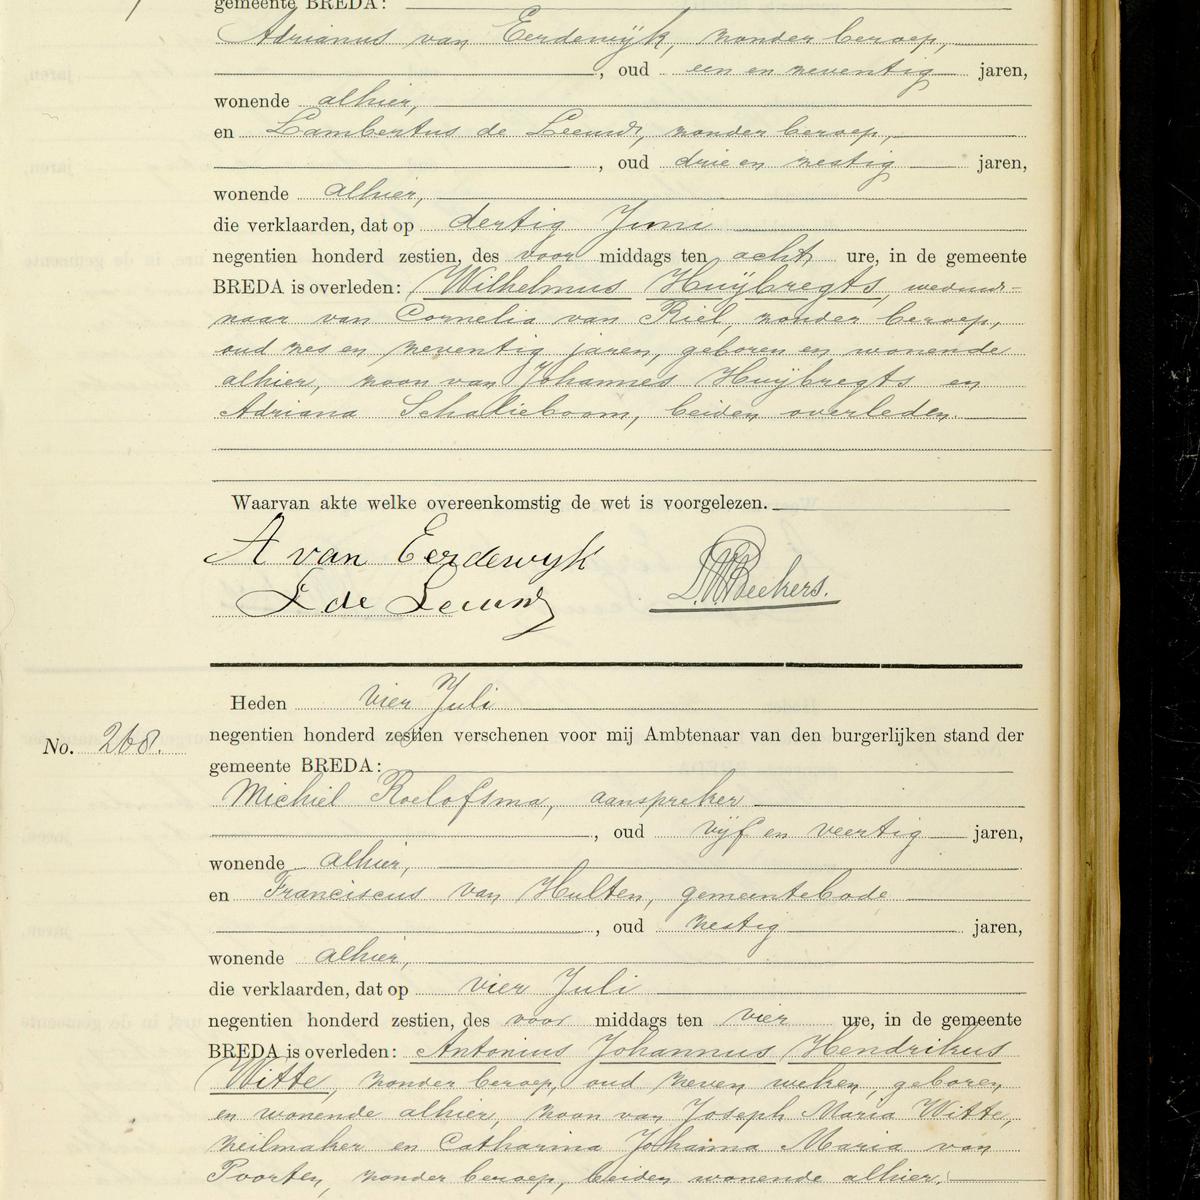 Civil registry of deaths, Breda, 1916, records 267-268